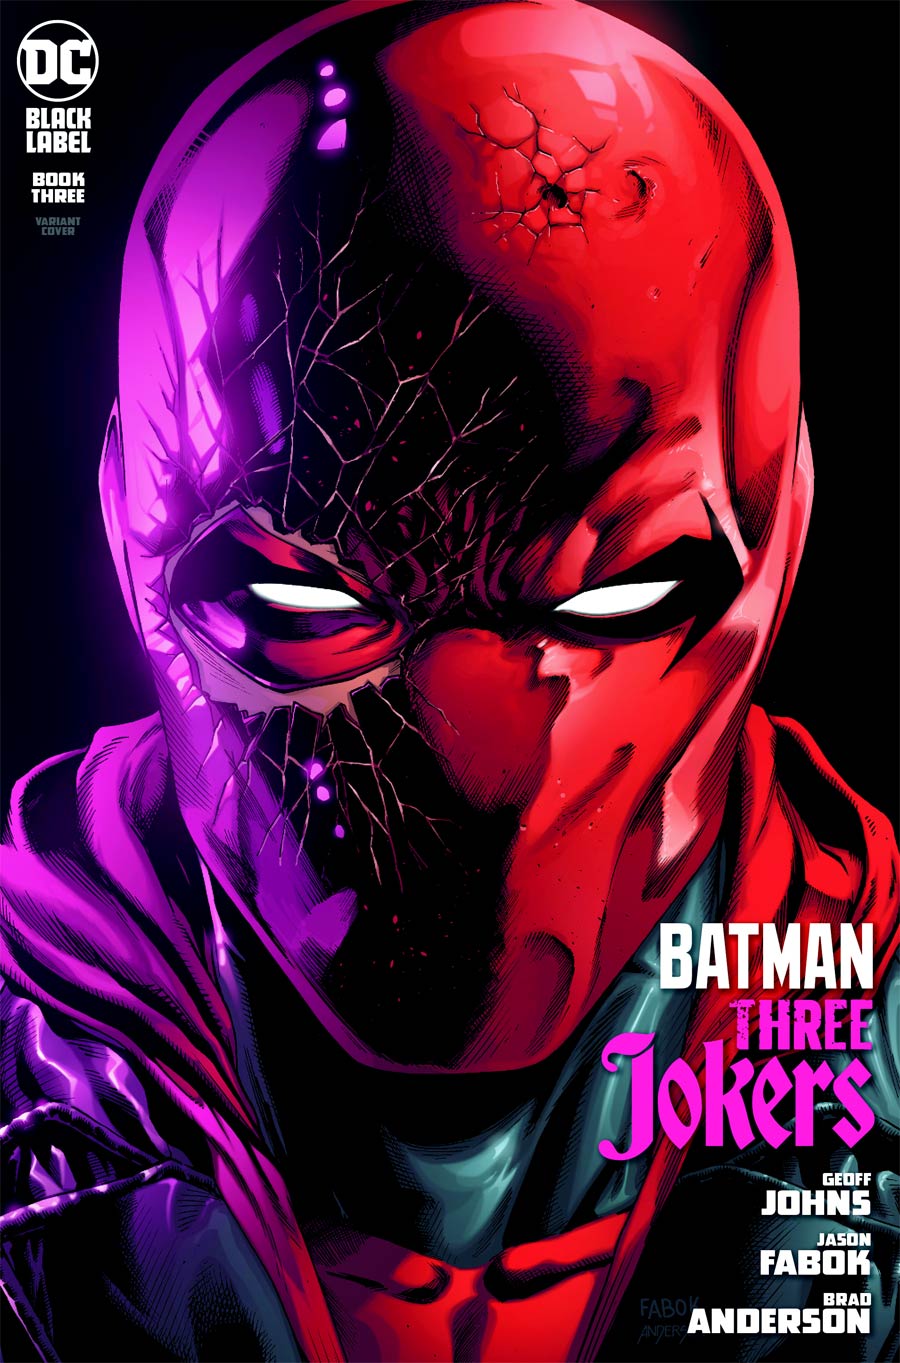 BATMAN THREE JOKERS #3 COVER B JASON FABOK RED HOOD VARIANT